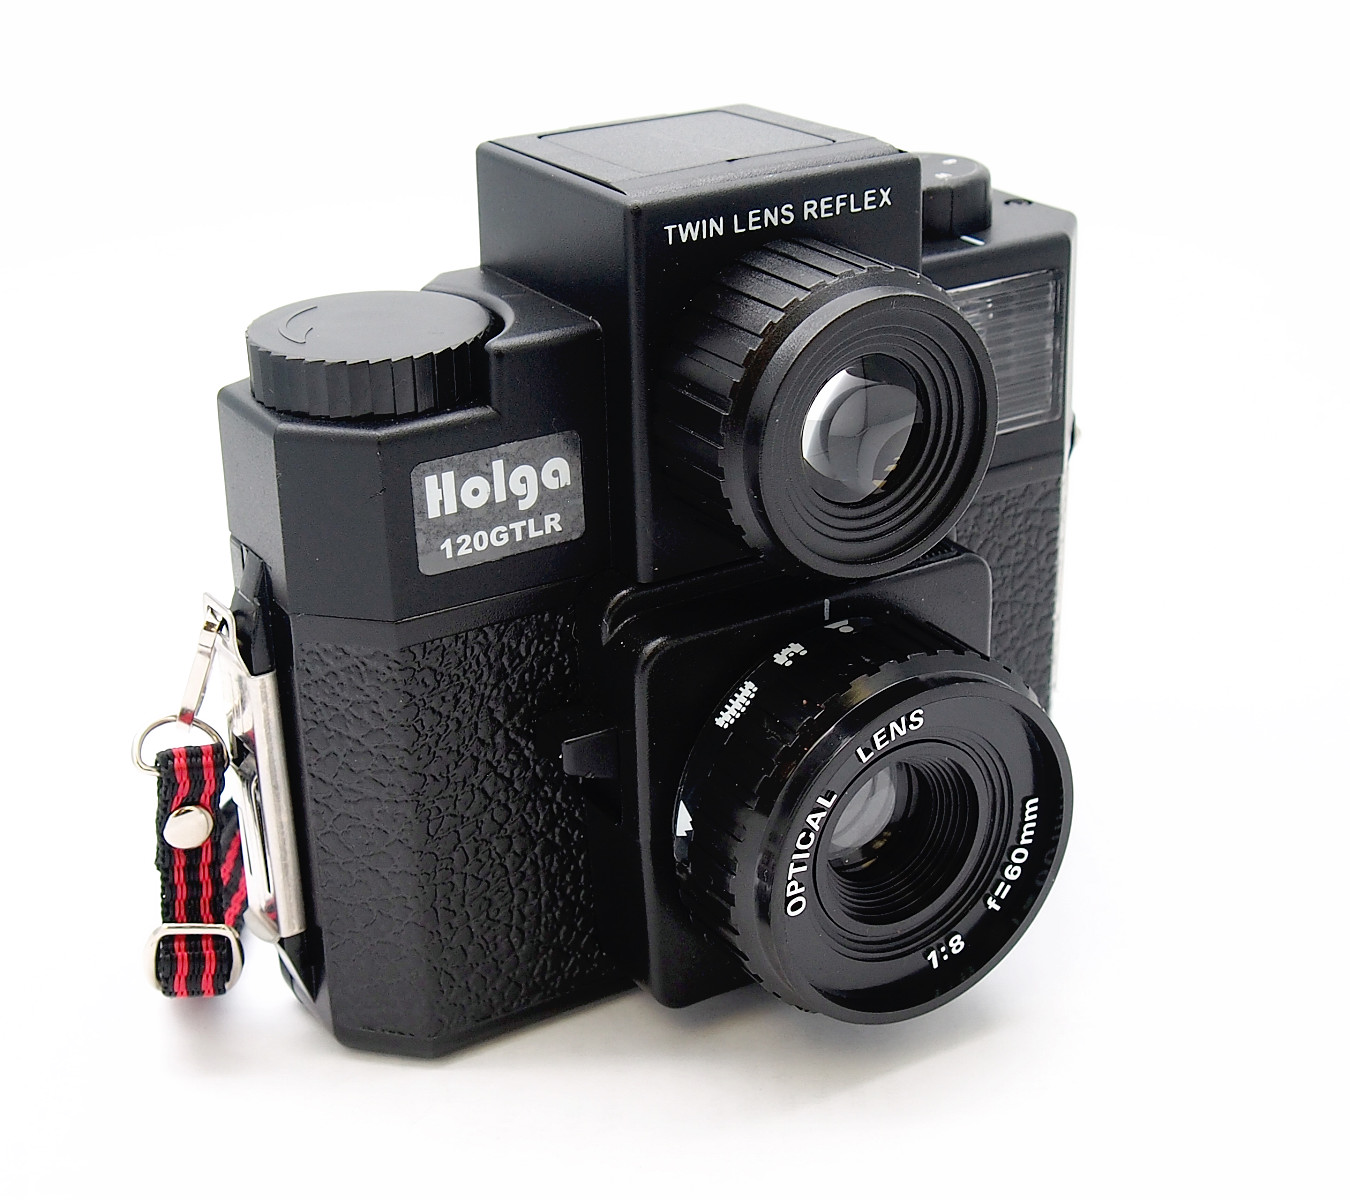 Holga 120G TLR 6x6cm Camera with Flash #9024M